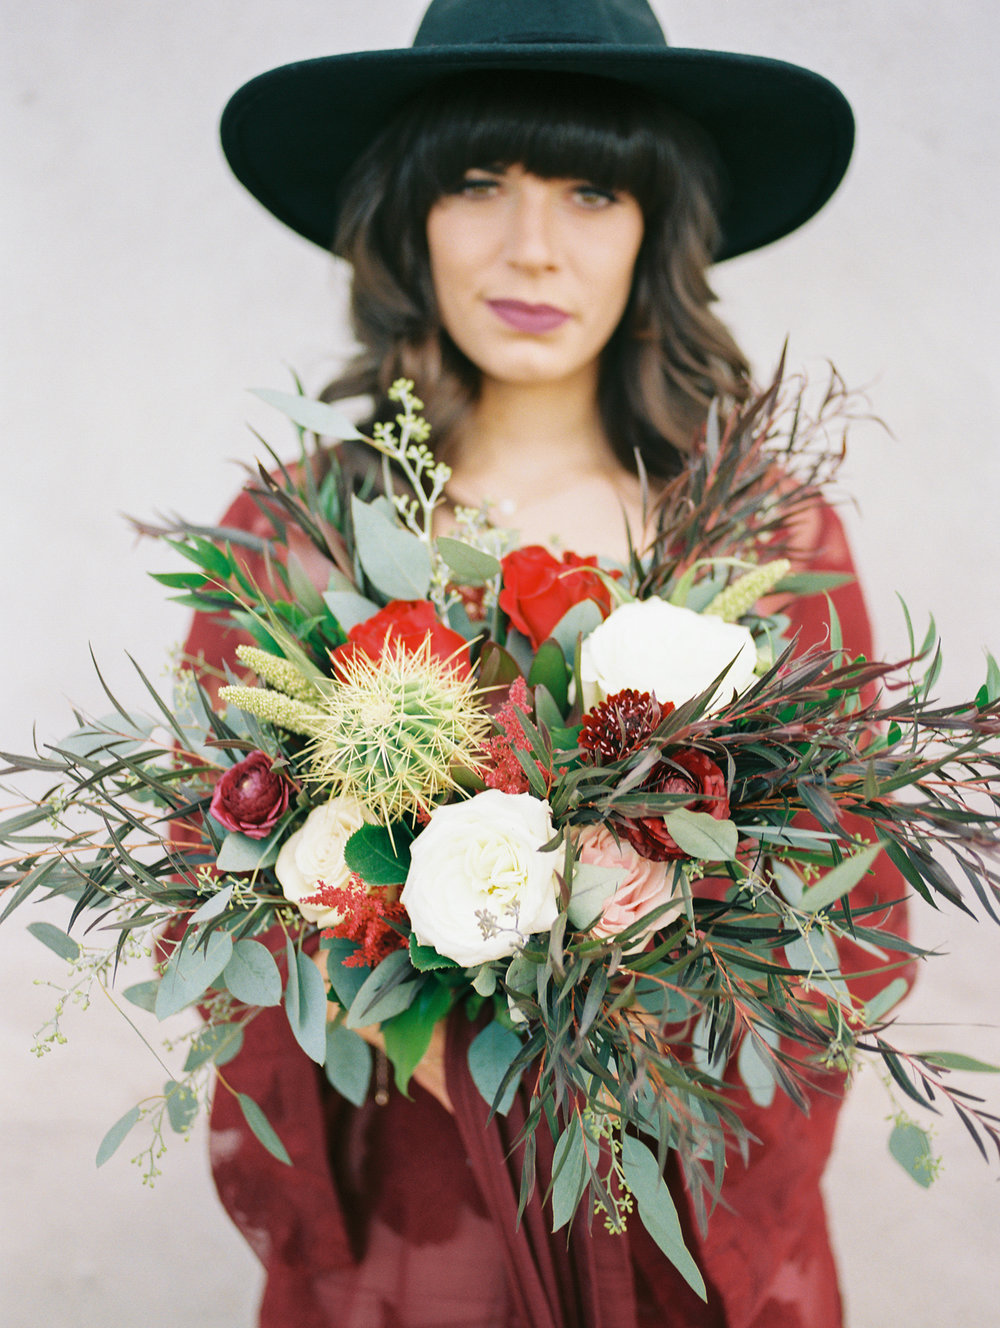  hipster bride wearing hat on her wedding day holding a desert bouquet&nbsp; 